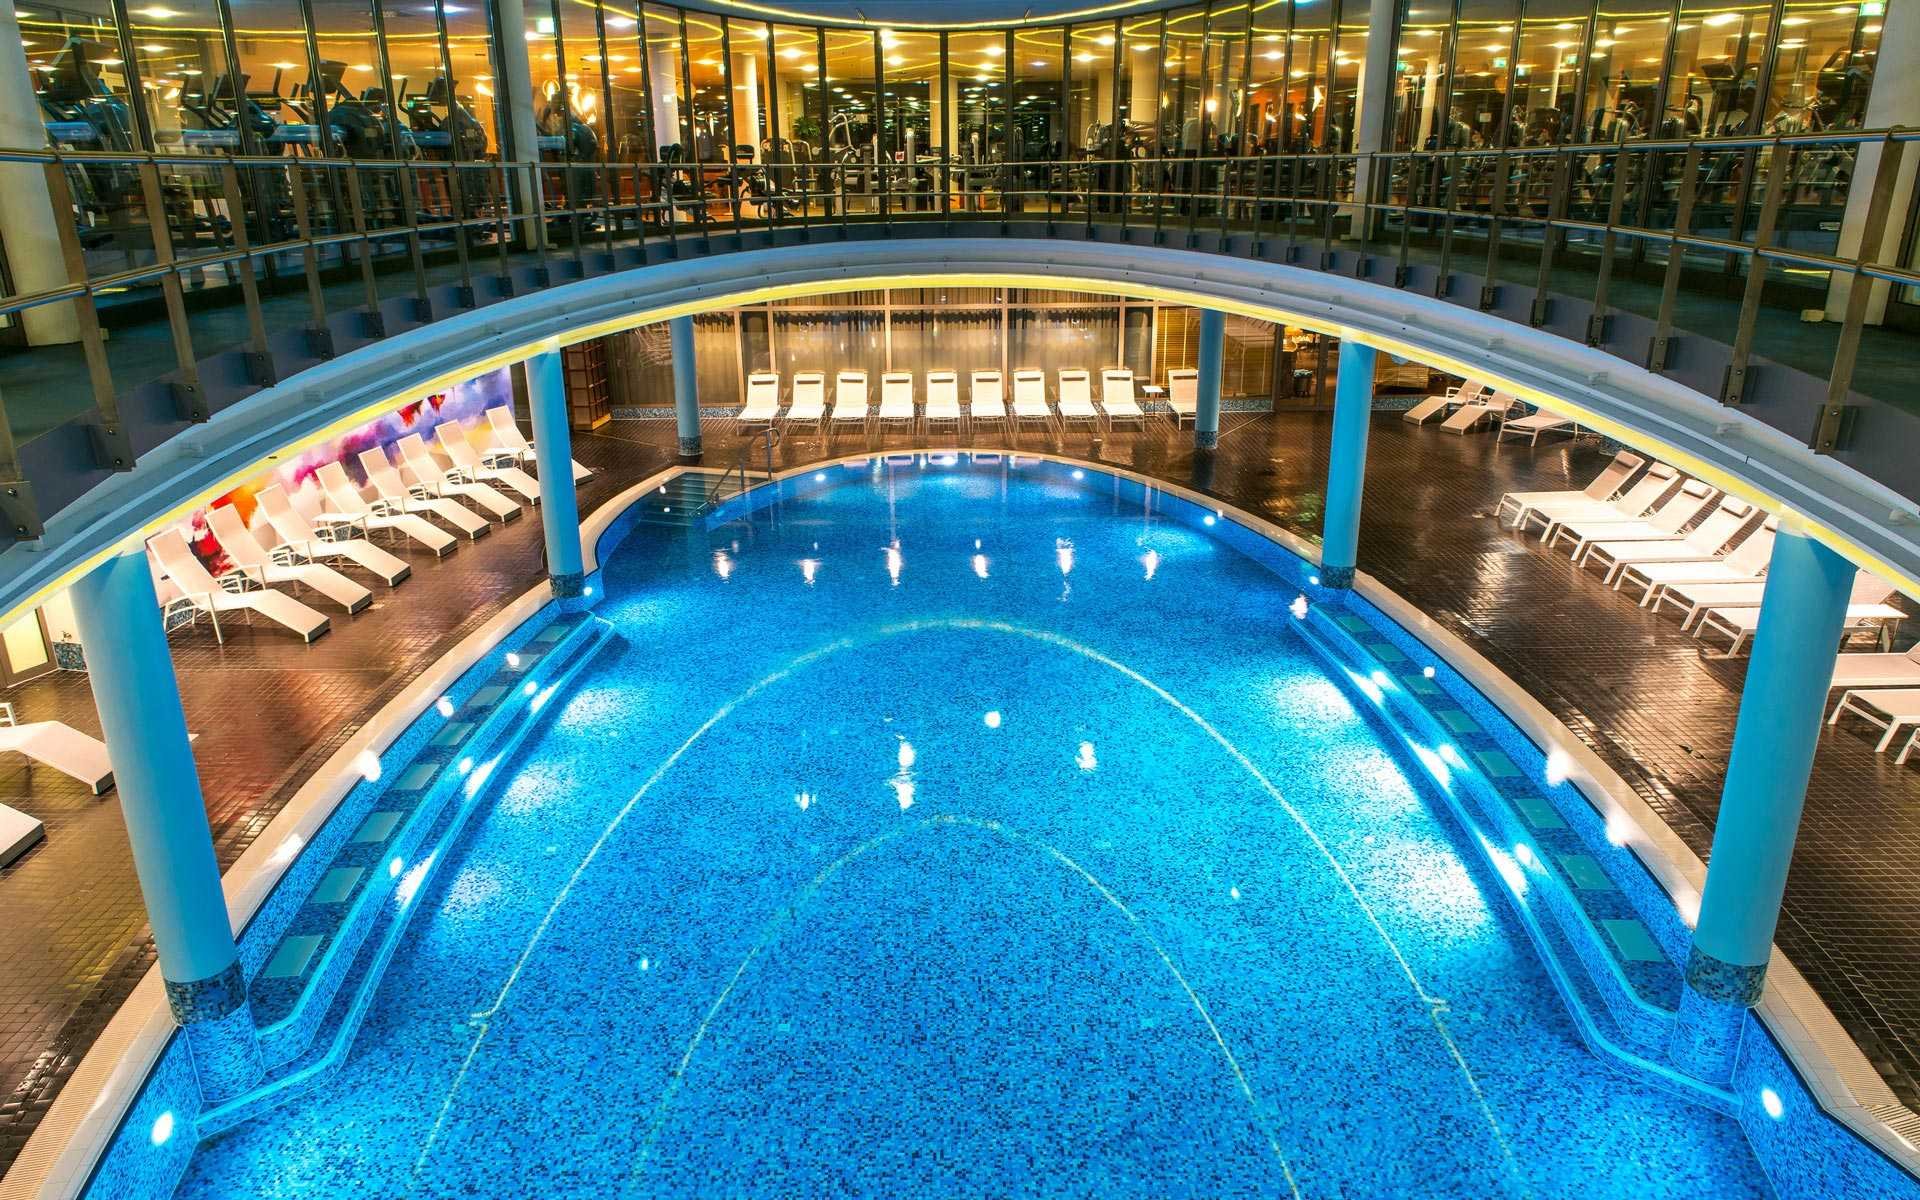 25 sqm pool at centrovital Spa & Sportclub